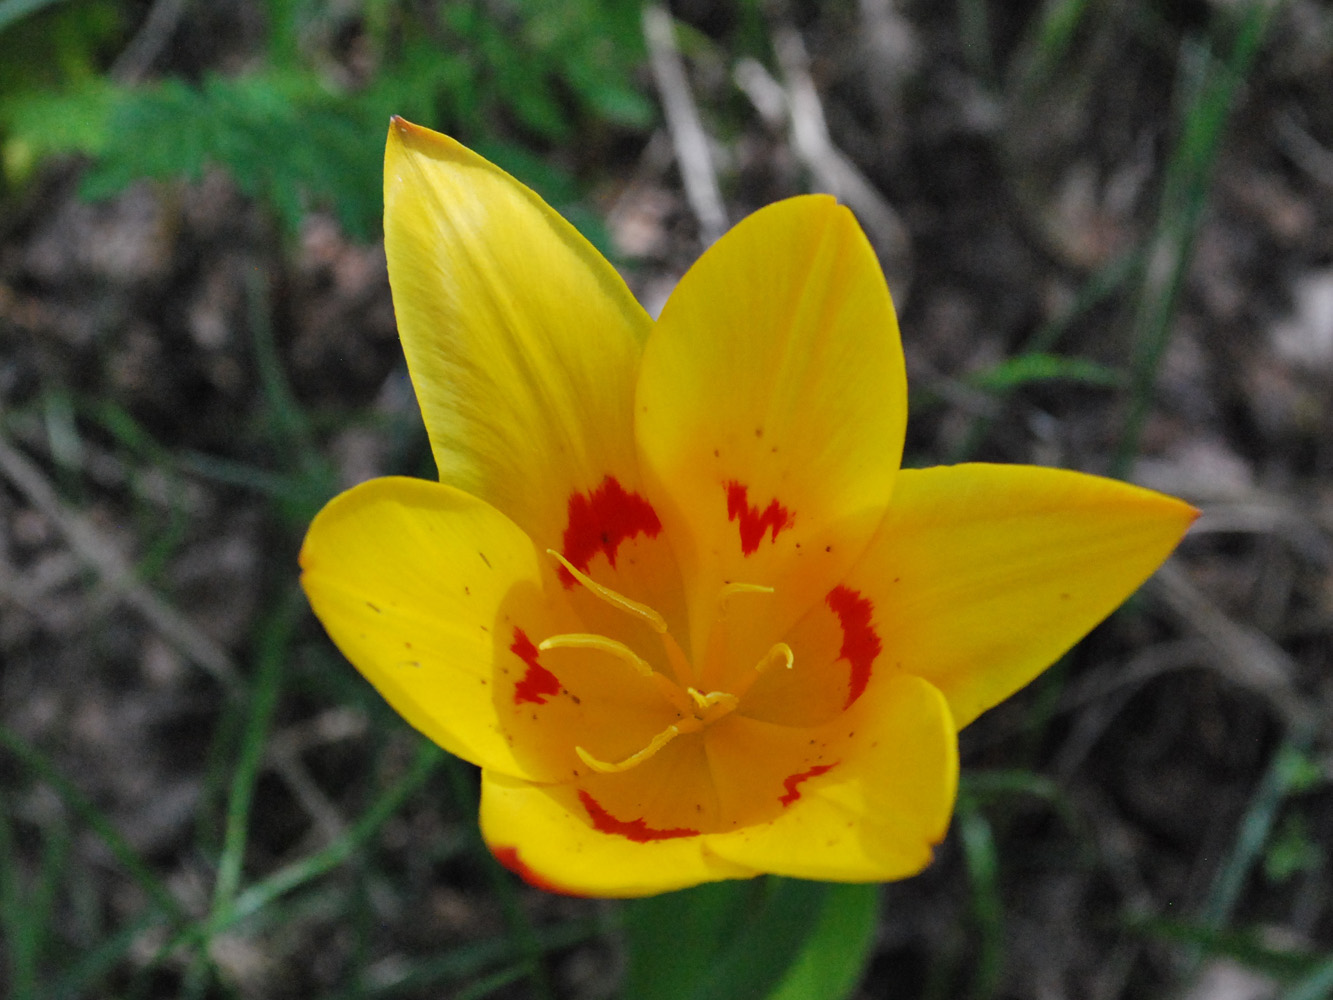 Image of Tulipa tschimganica specimen.